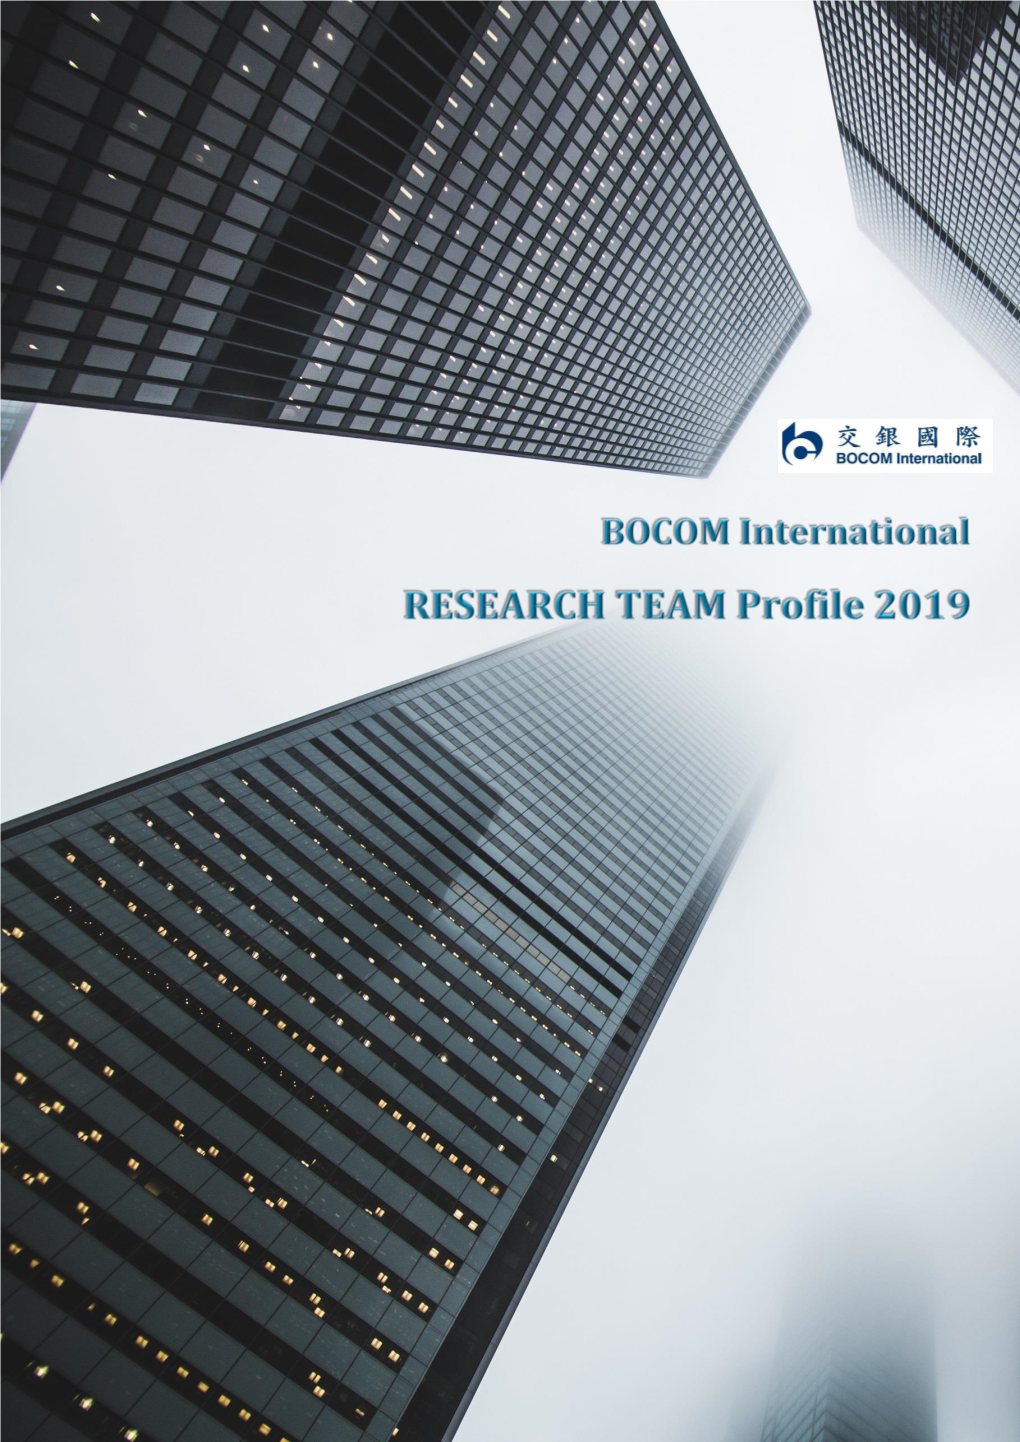 BOCOM International Research